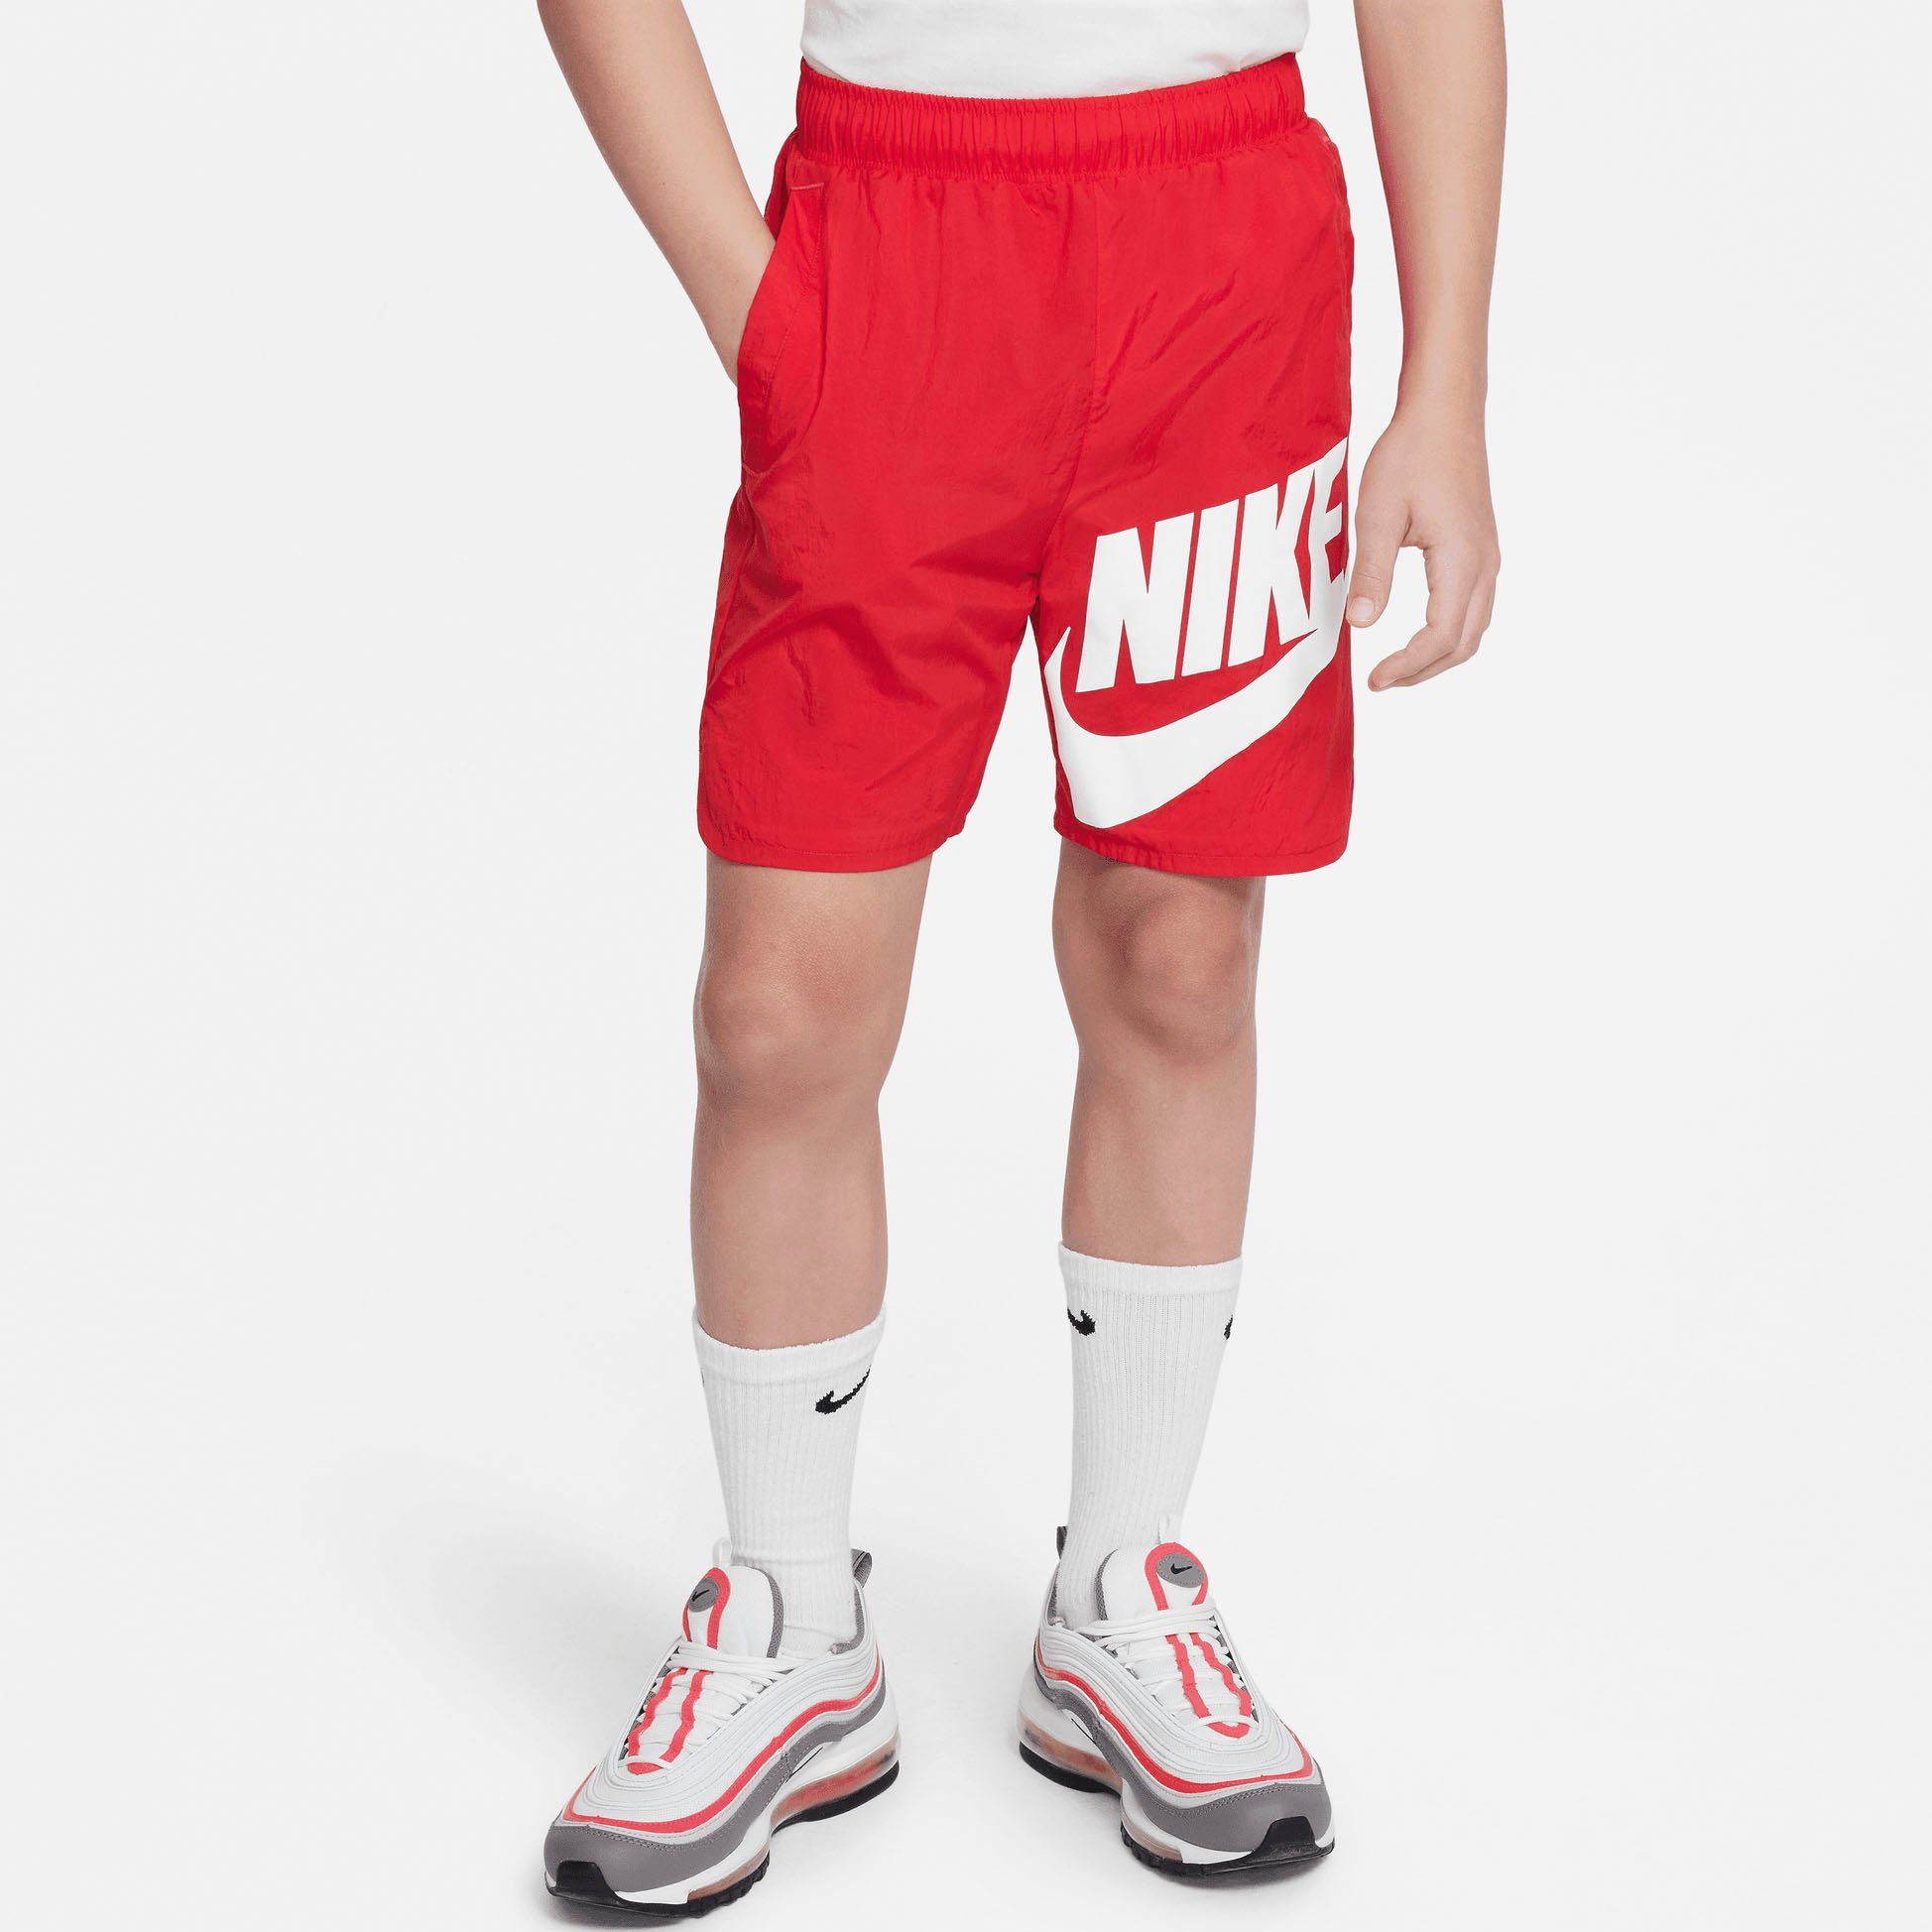 Shorts (Boys) Kids' rot Sportswear Nike Shorts Big Woven